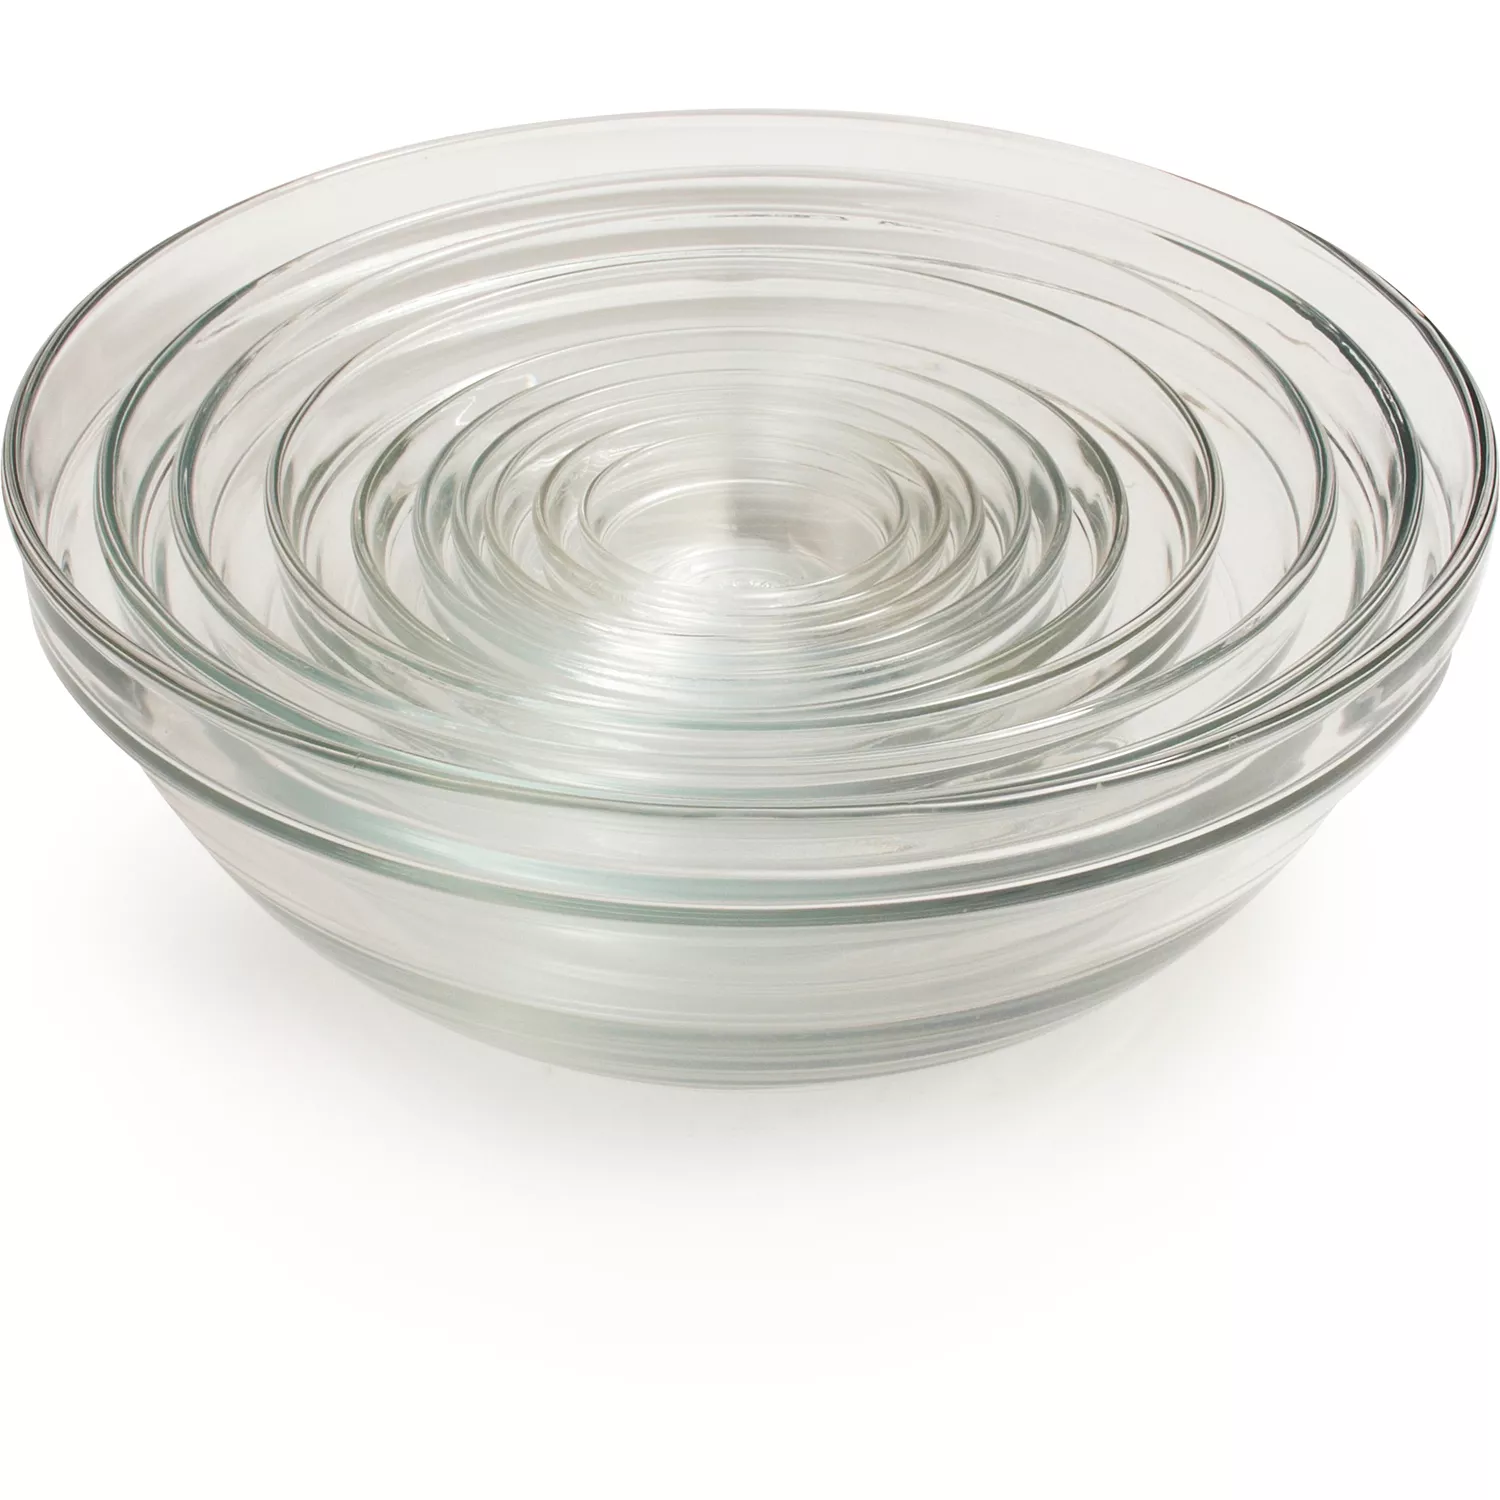 Duralex Duralex 0.5 quart Glass Mixing Bowl - Whisk